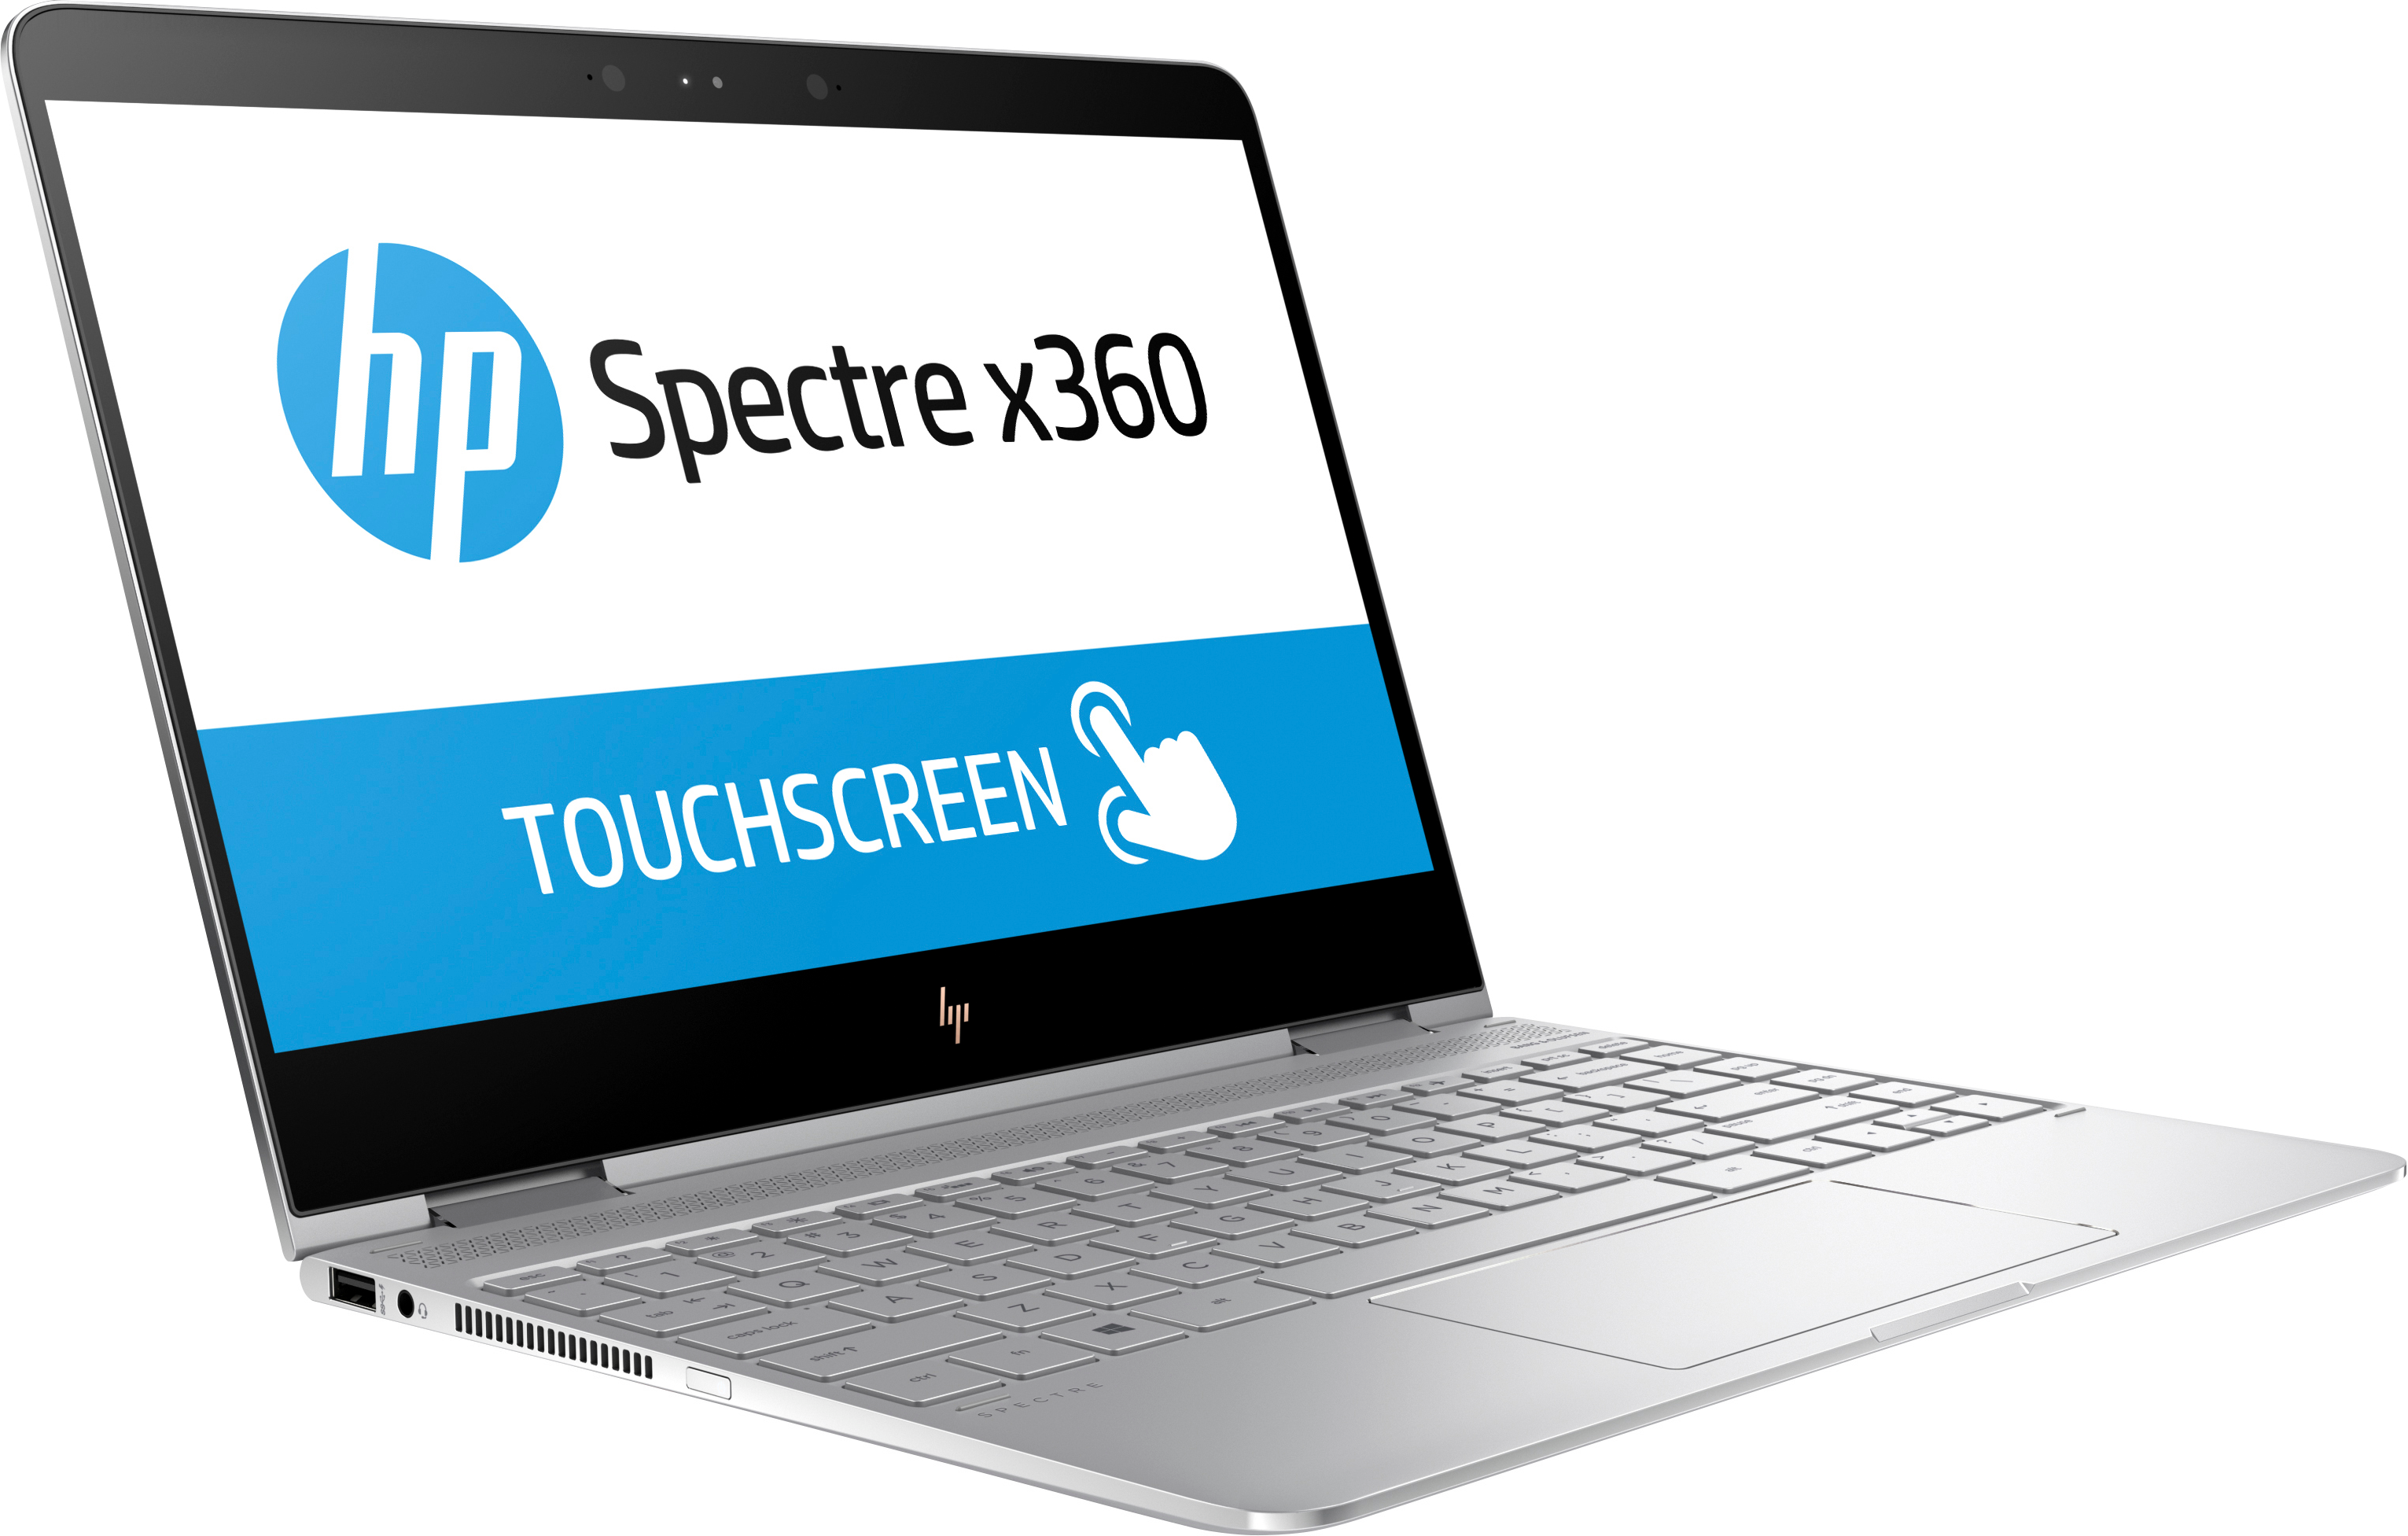 H P Spectrex360 Touchscreen Laptop PNG image